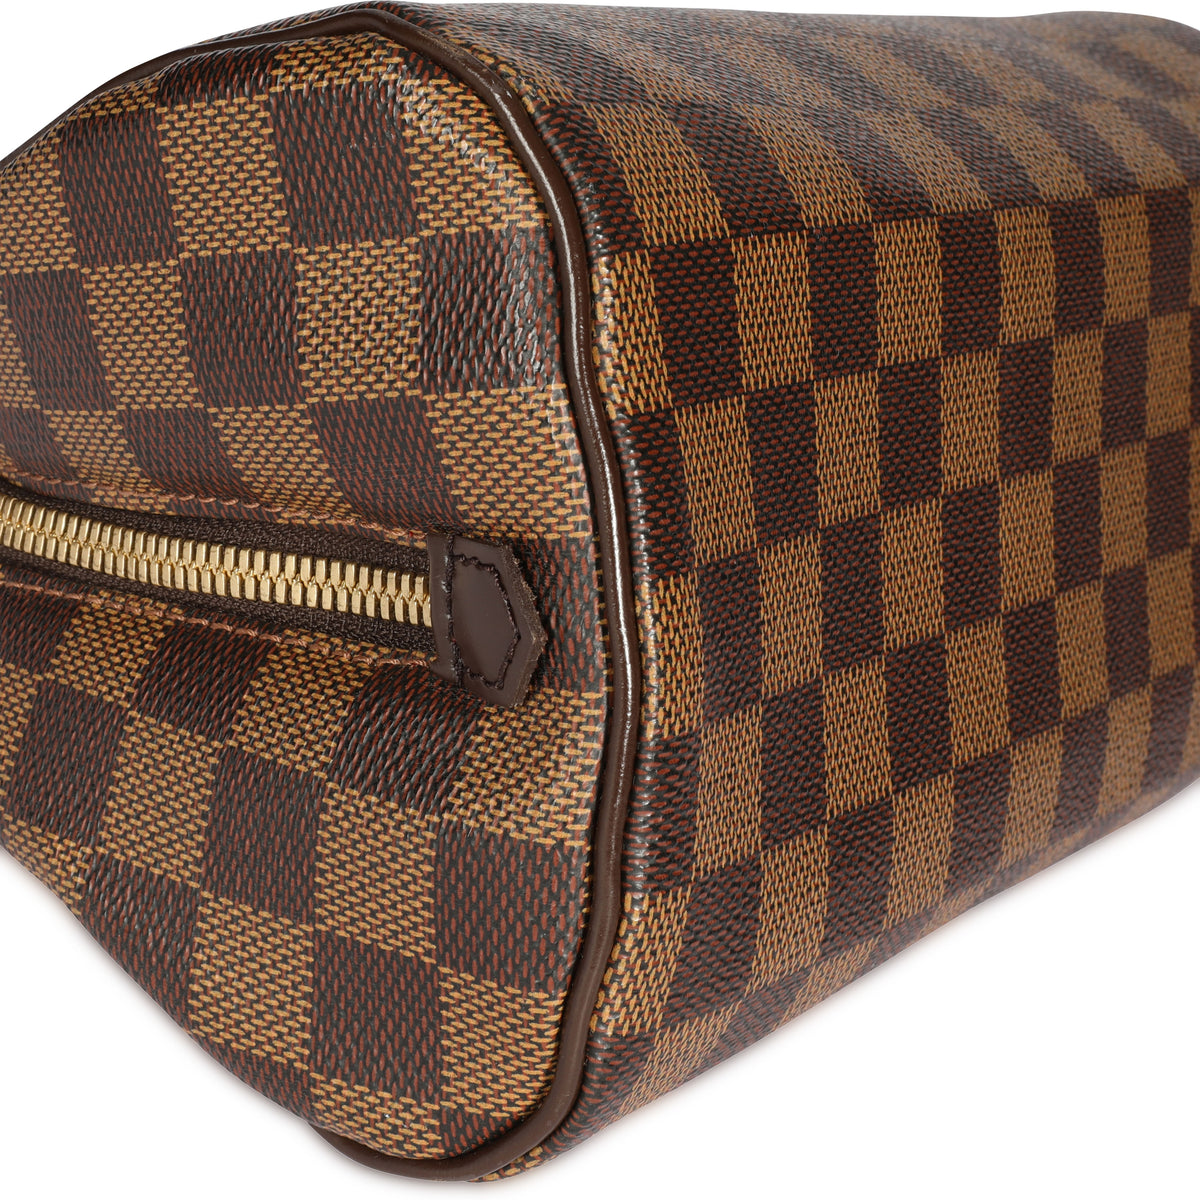 Louis Vuitton, Bags, Sold Authentic Lv Damier Ribera Mini